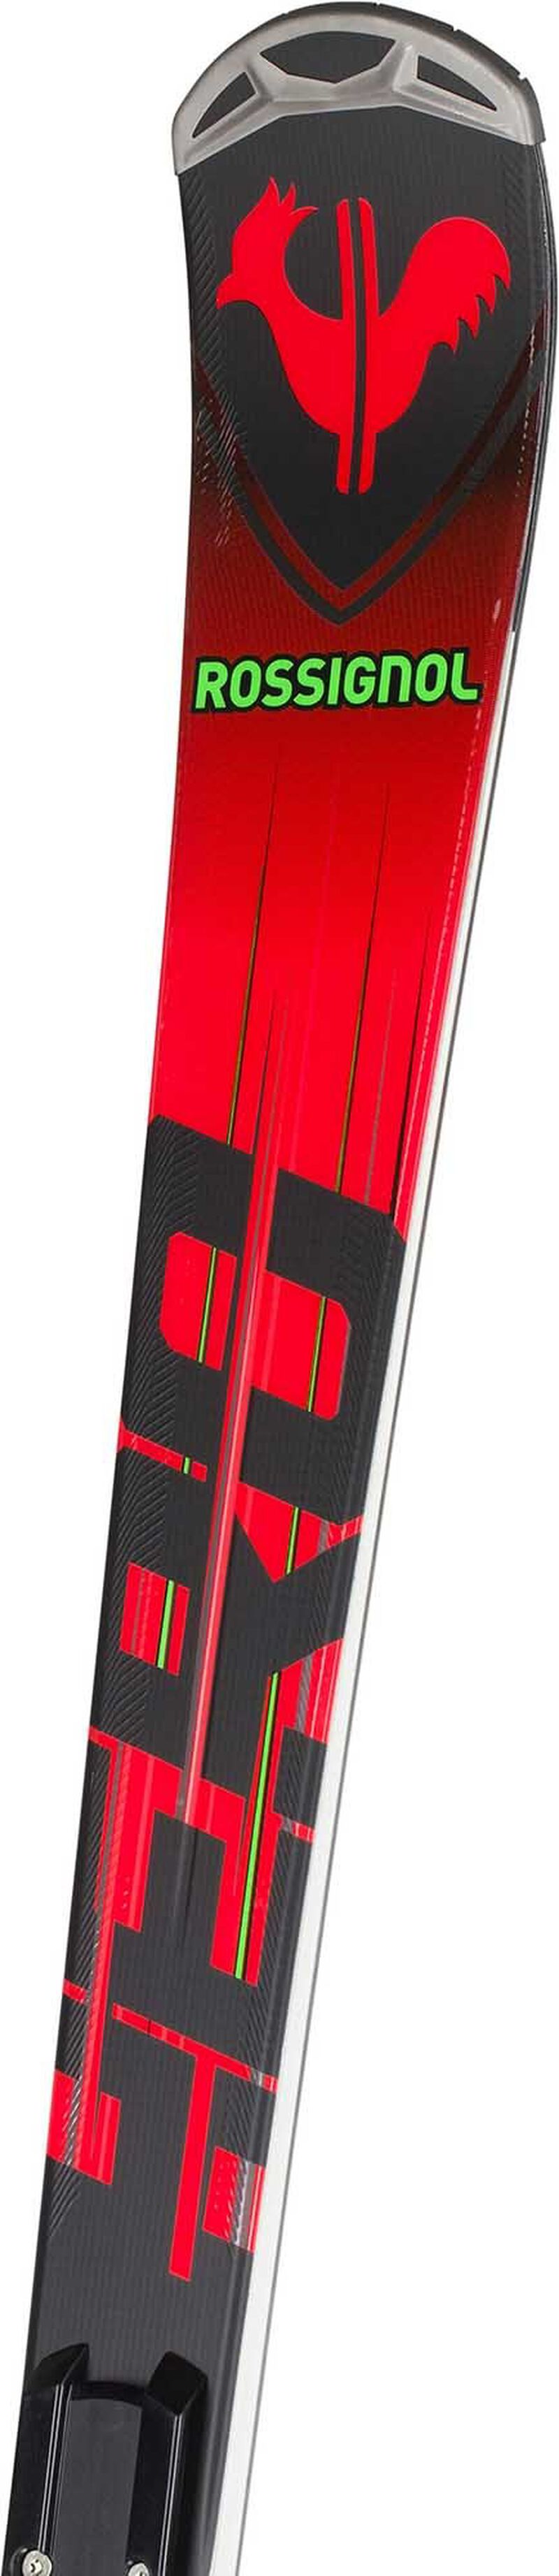 Unisex's Racing Skis HERO ELITE ST TI KONECT